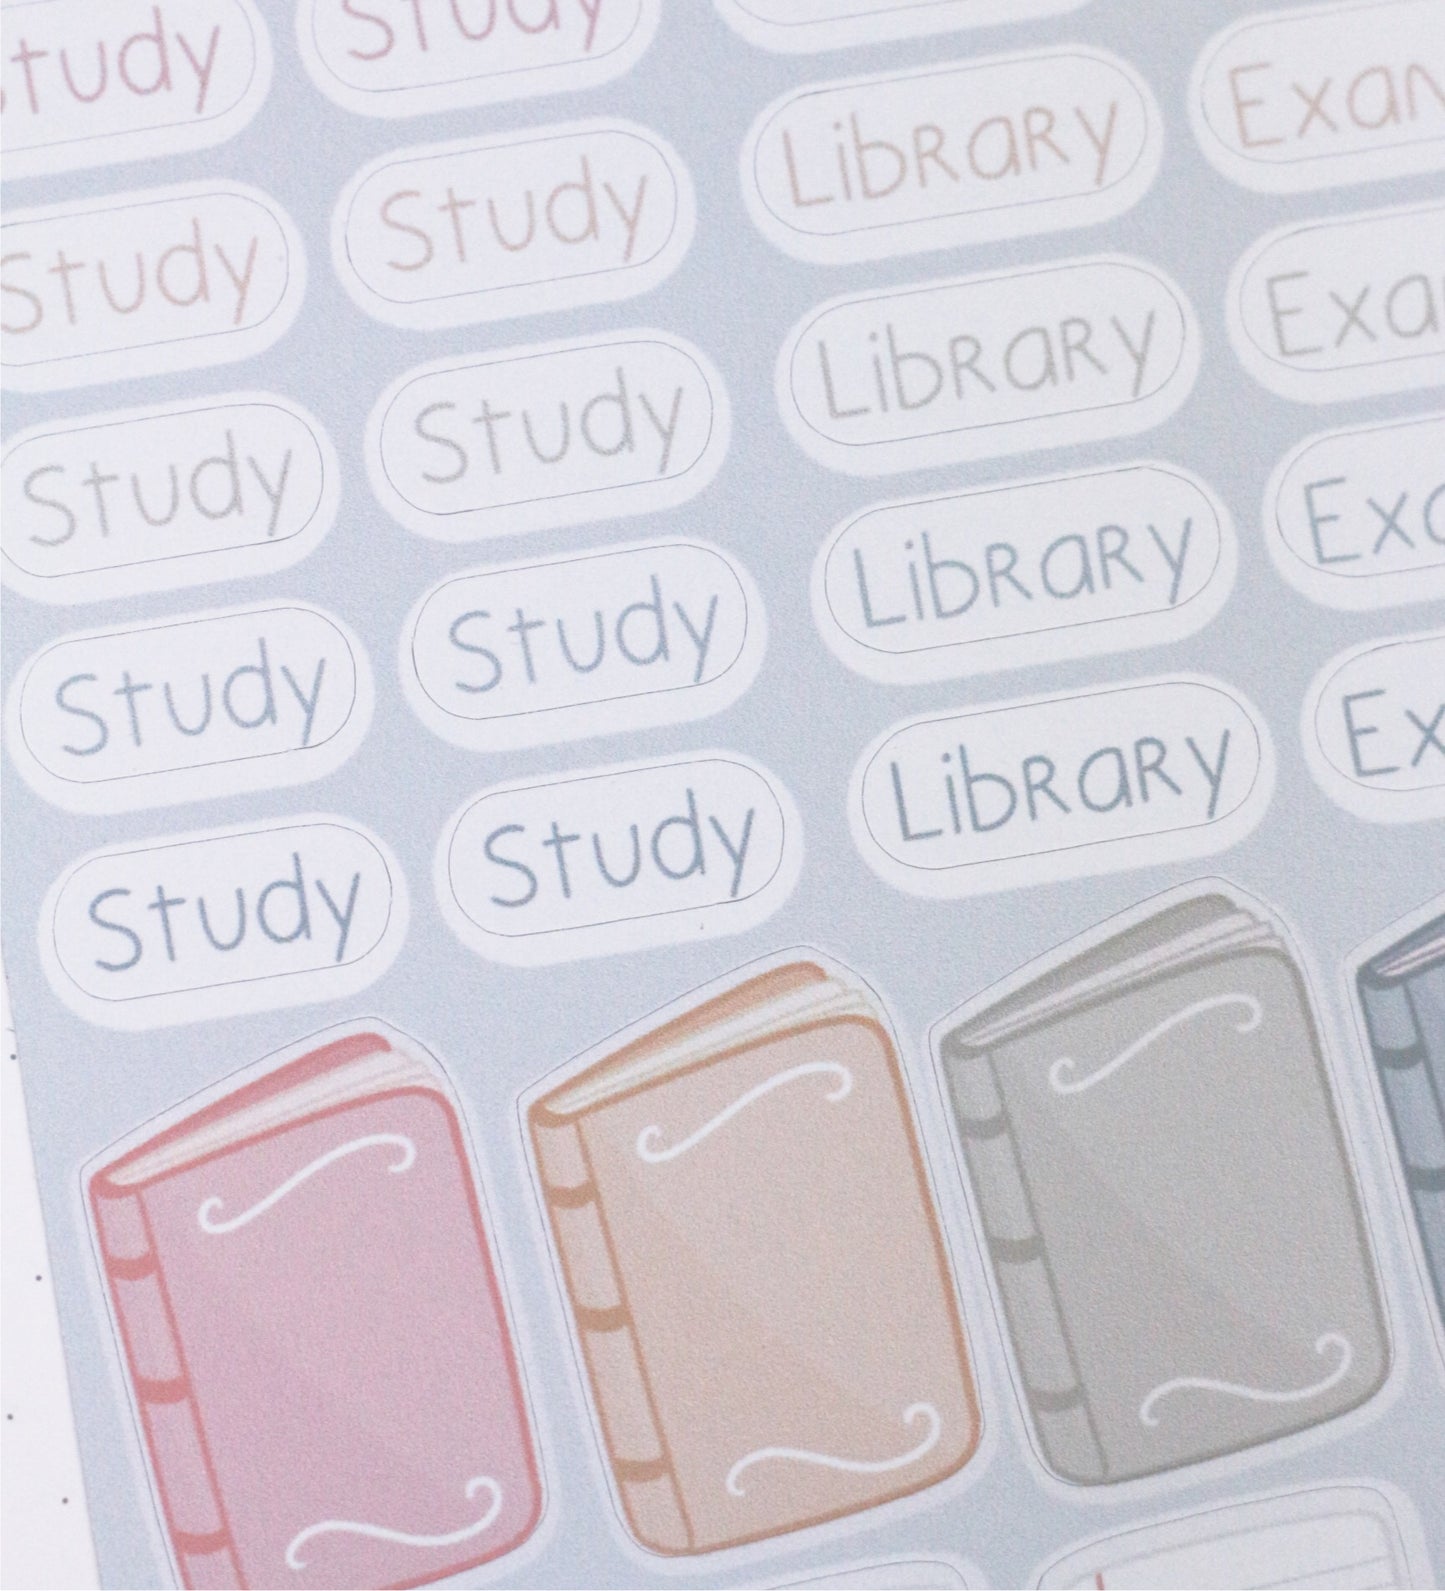 Pastel school stickers - Exam planner stickers - Back to school stickers